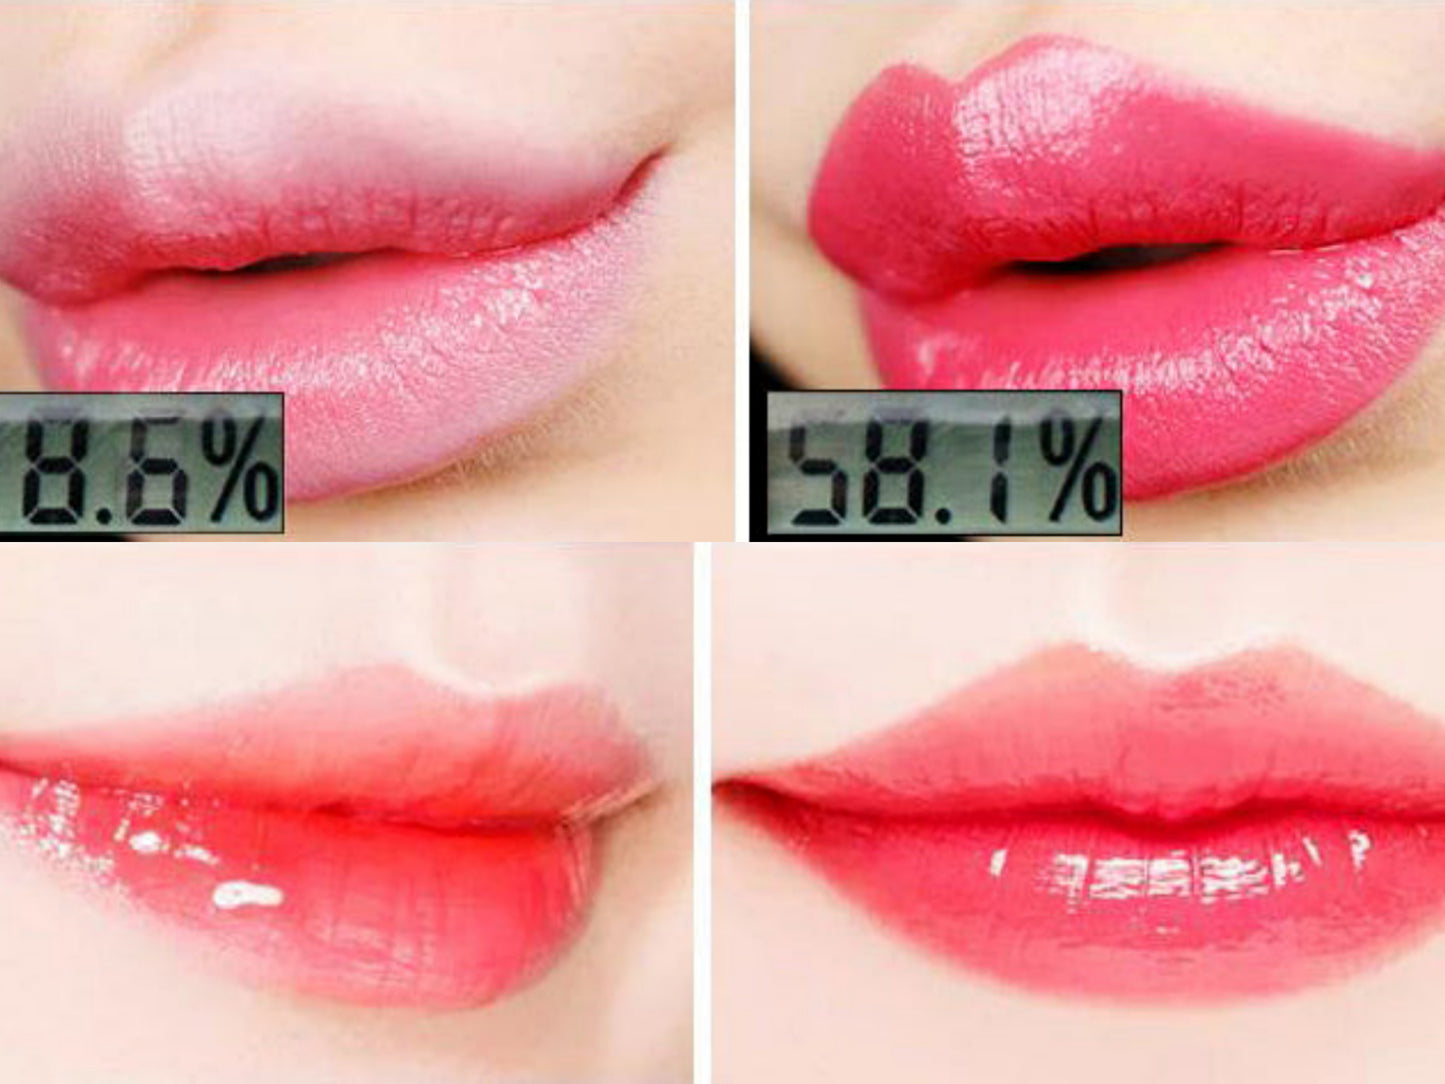 Metacnbeauty Moisturizing Lip Gloss Color Change Aloe Vera